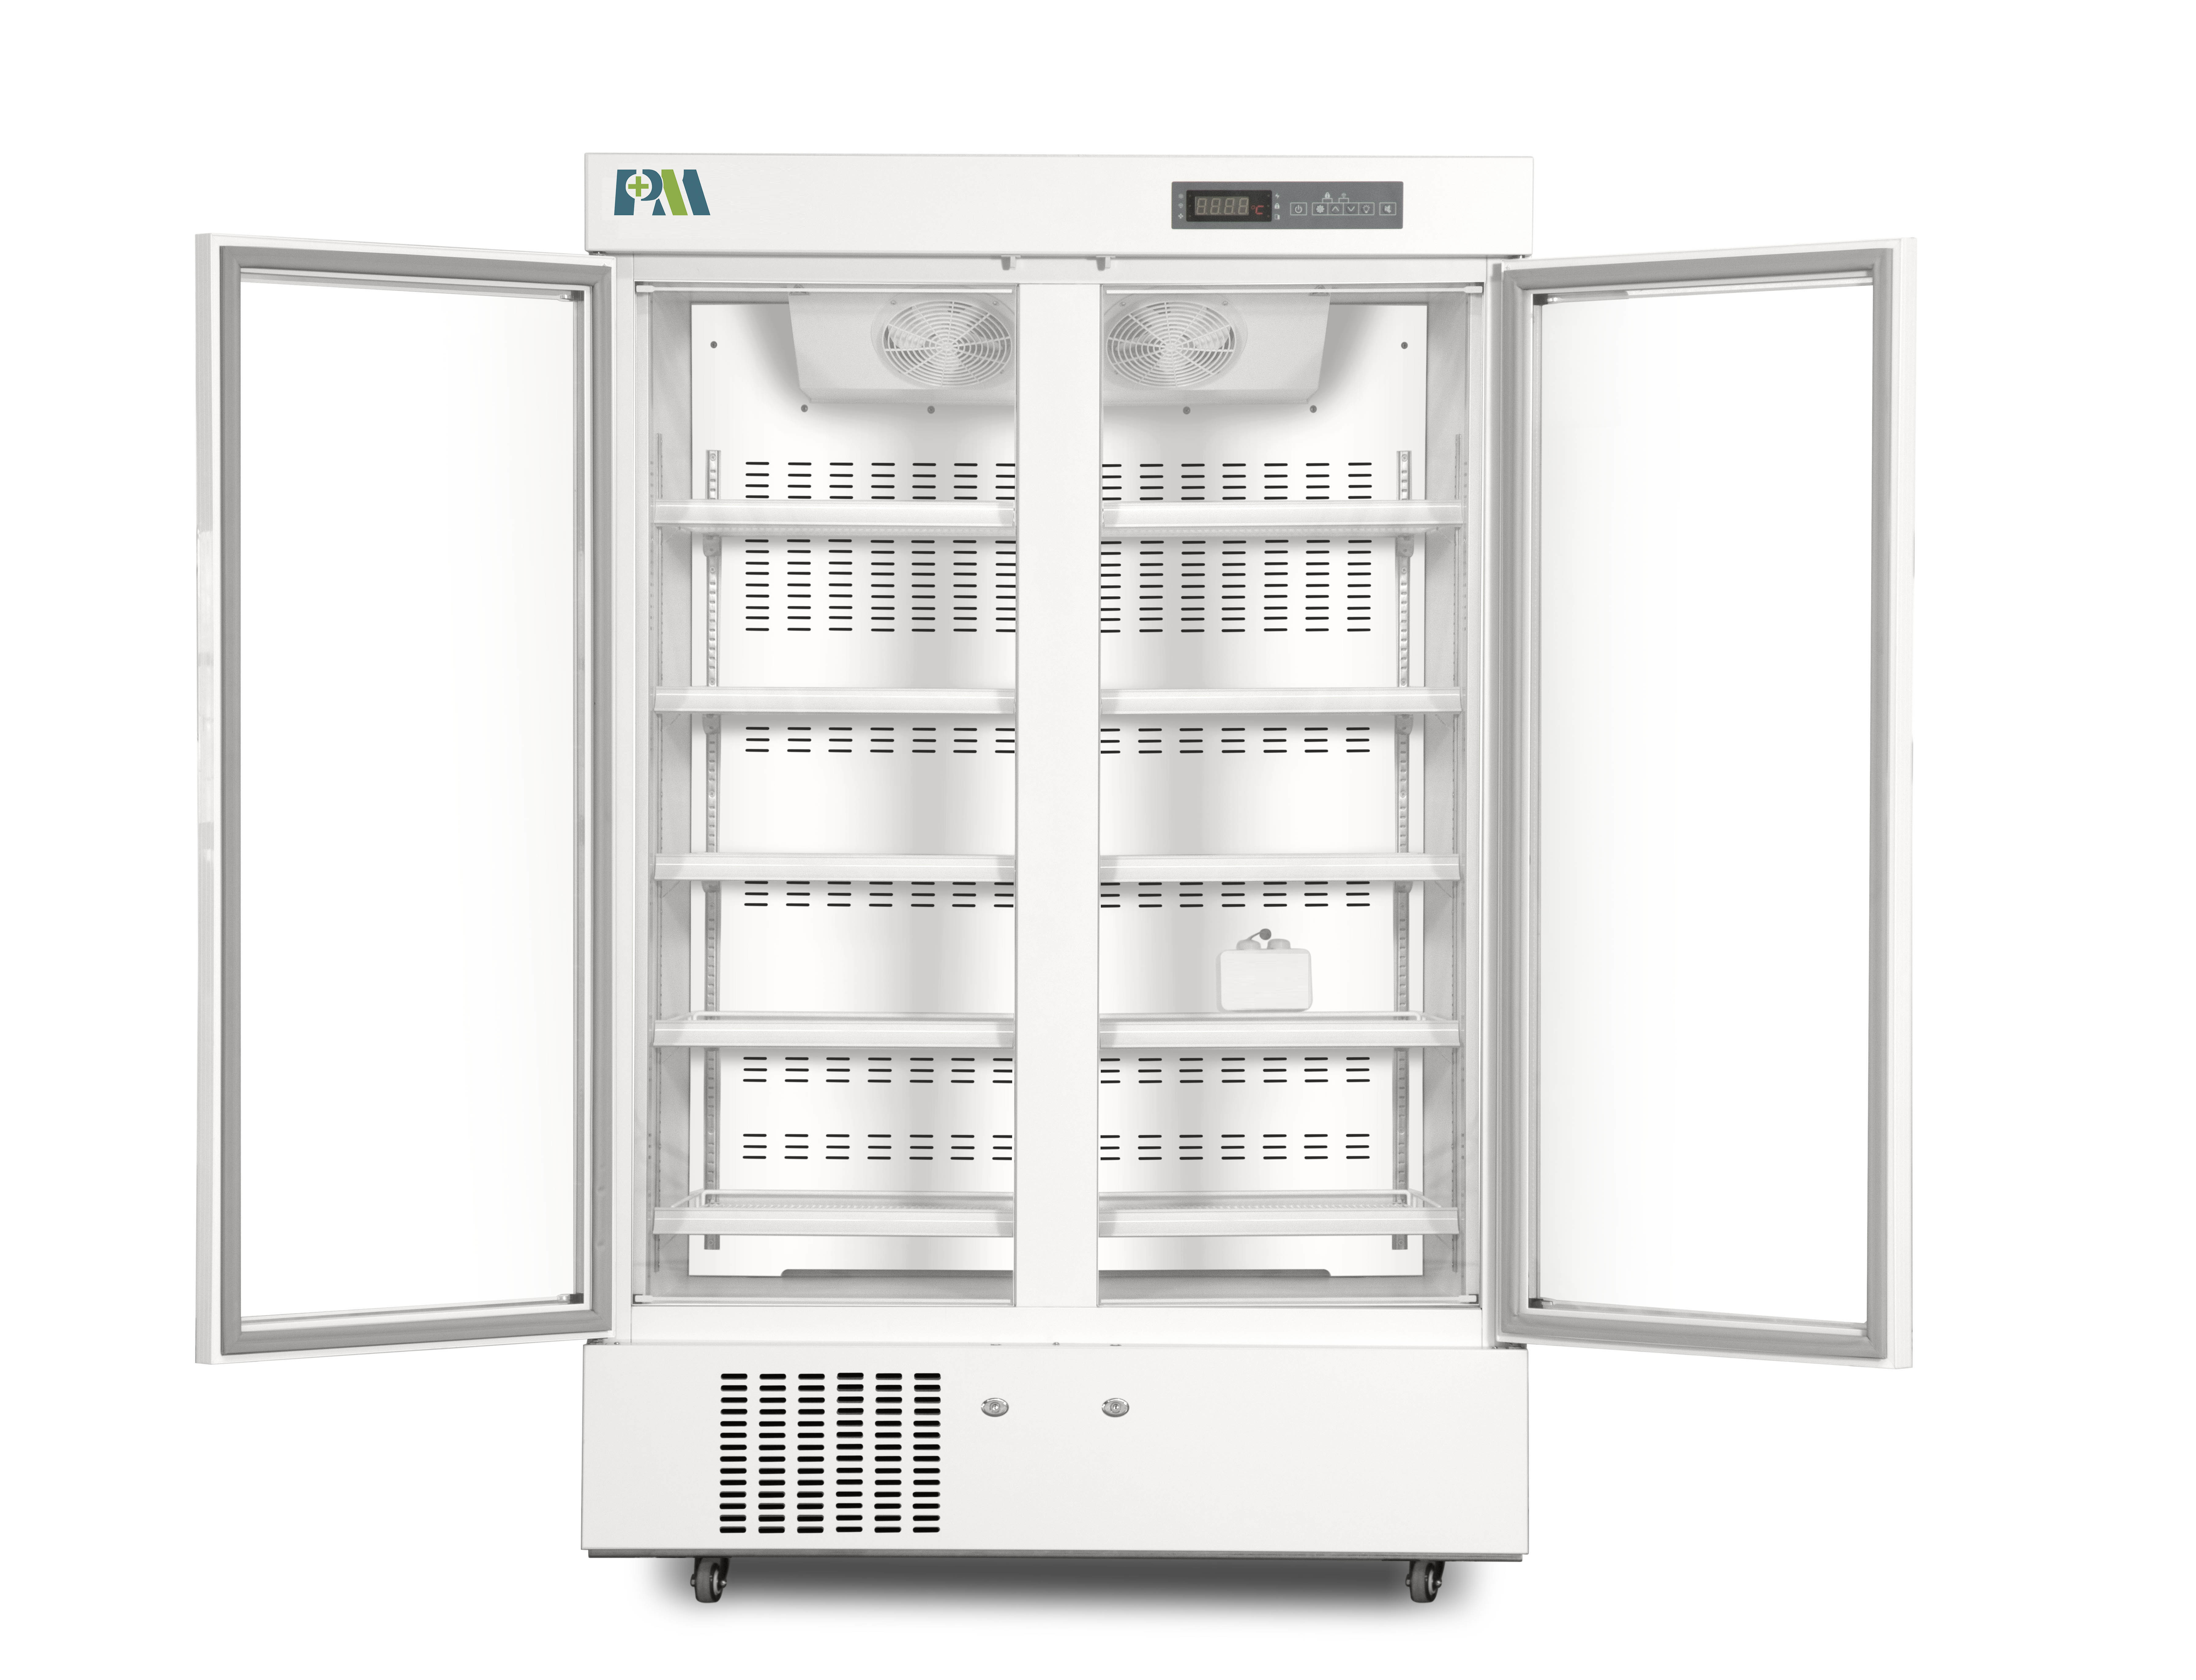 2~8 Degrees Promed 1006L LED Digital Display Pharmacy Medical Refrigerator for Lab/Hospital